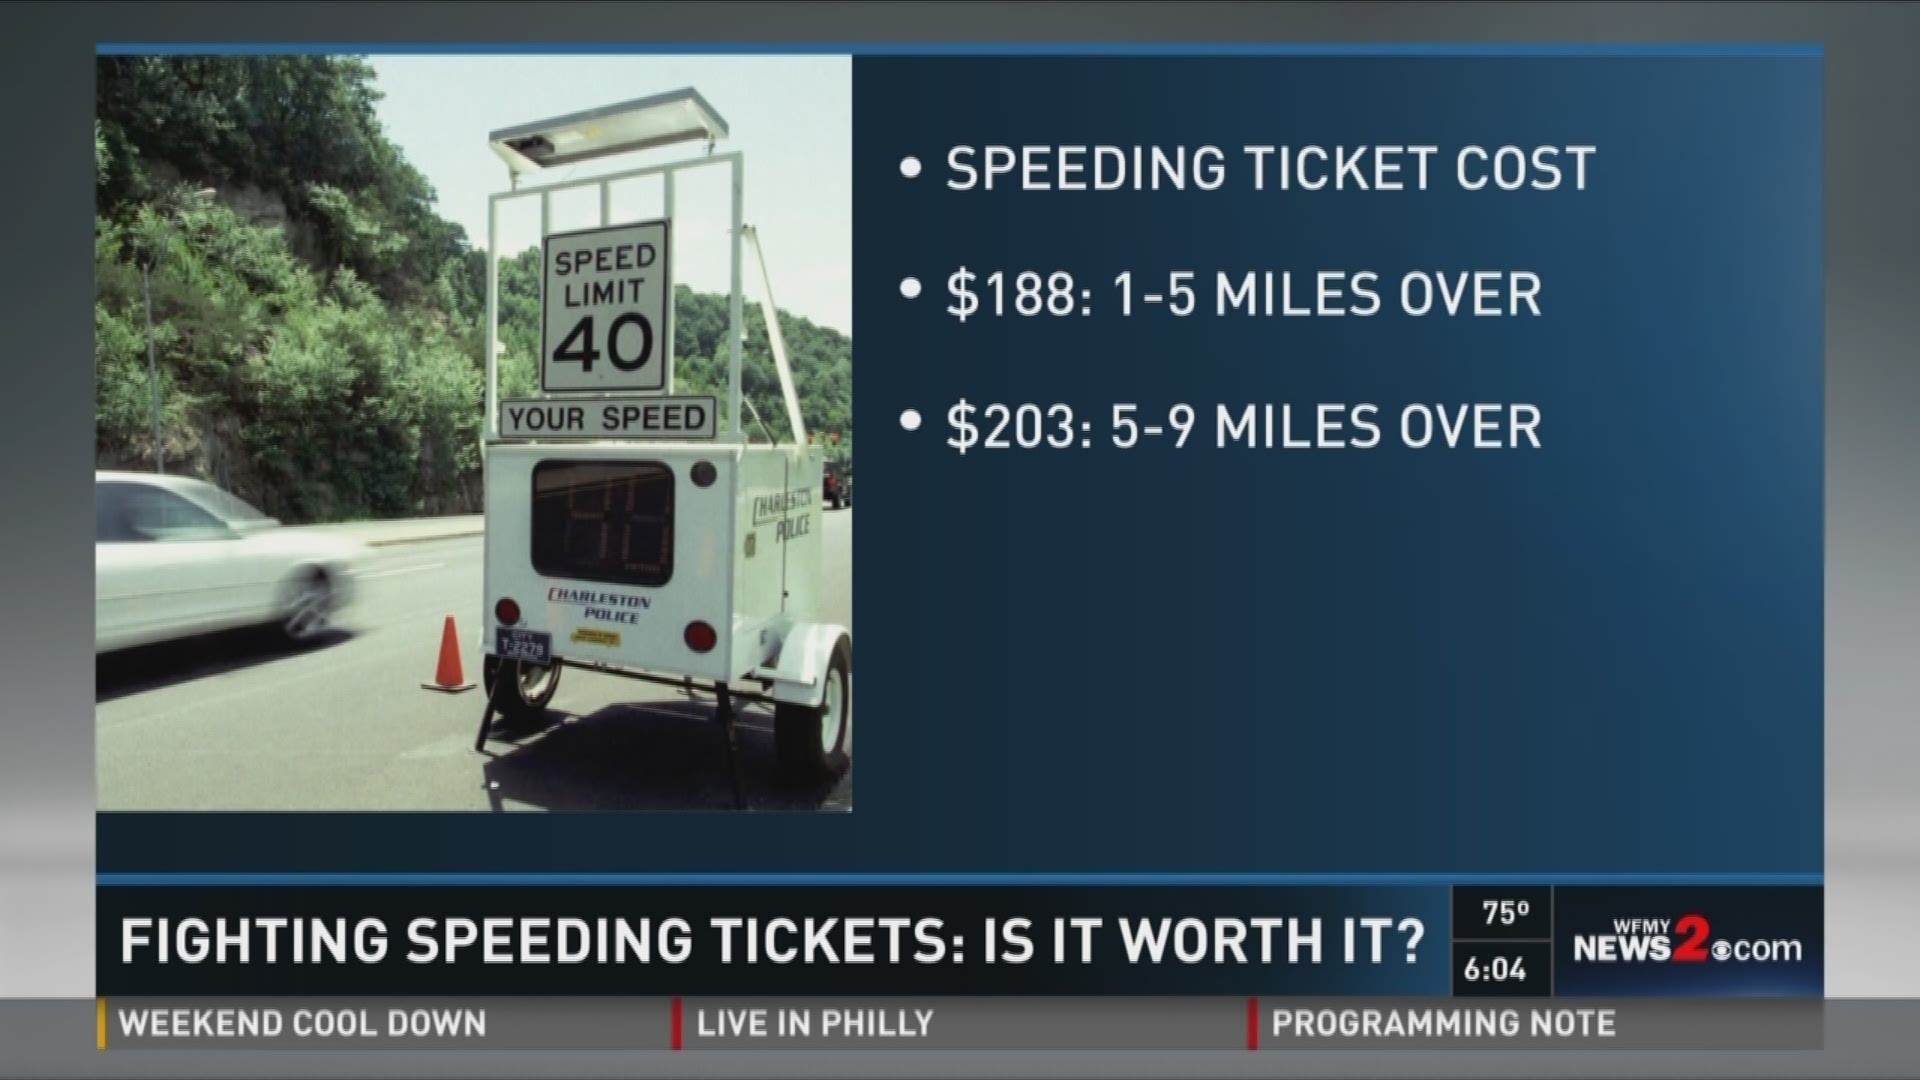 Fighting Speeding Tickets: Is It Worth It?